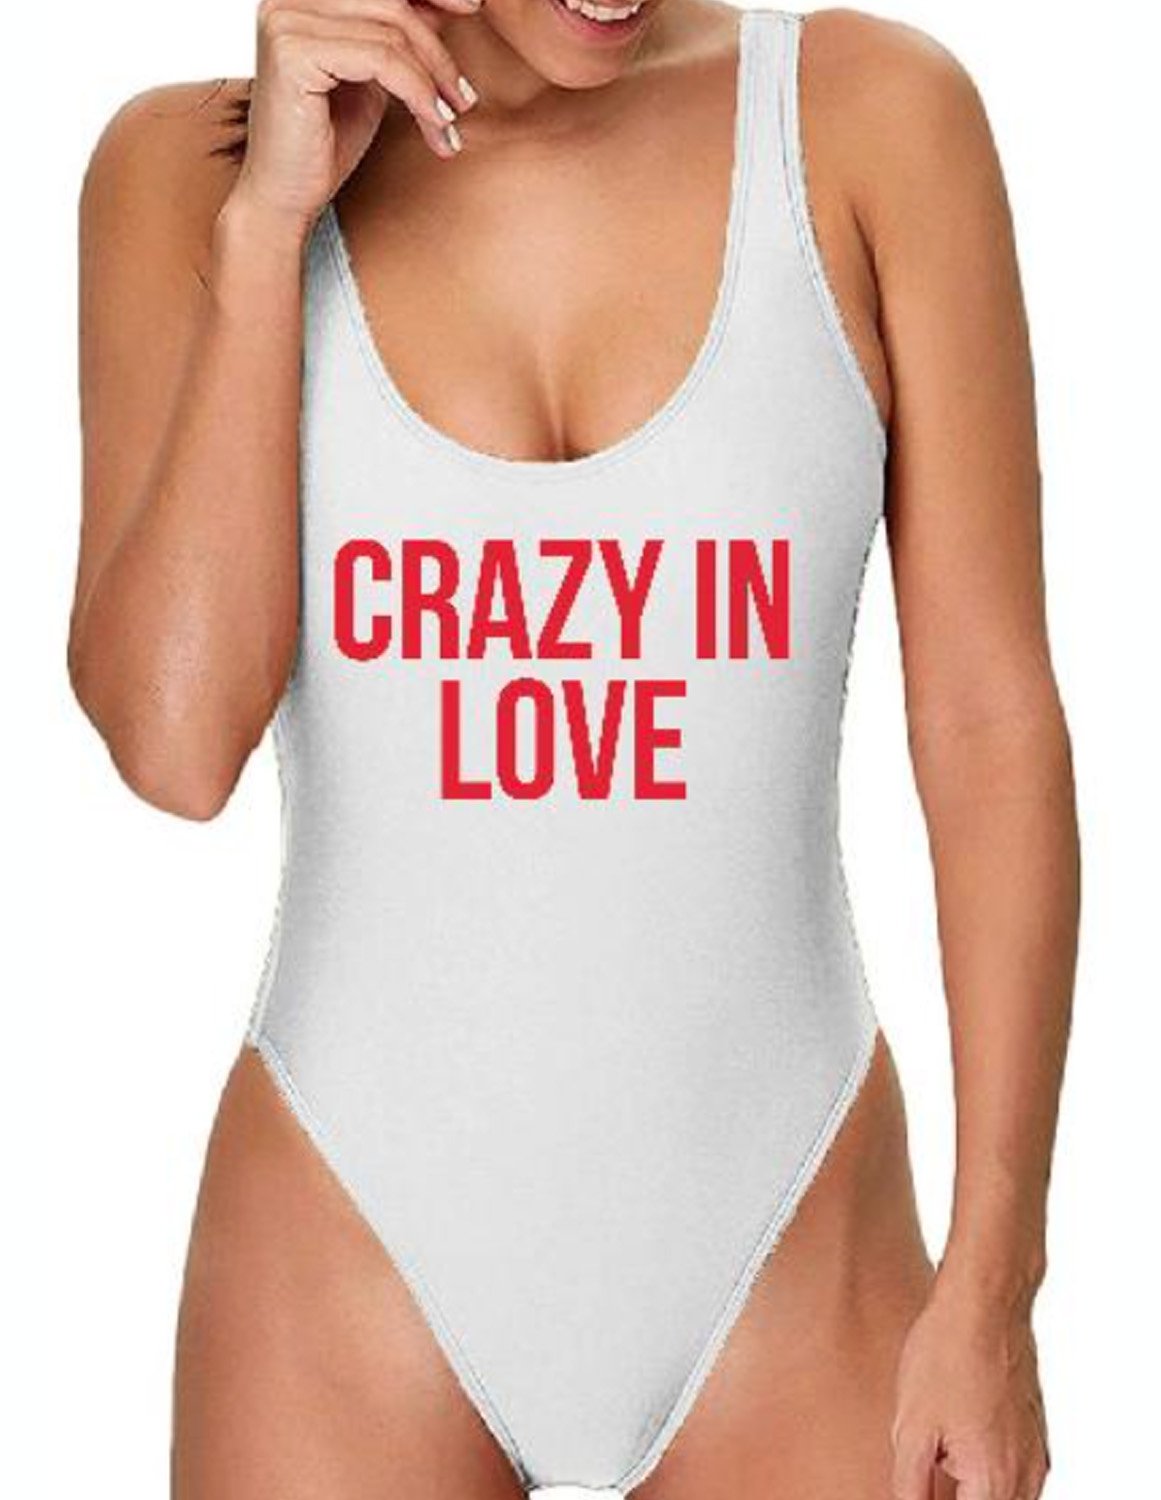 Crazy & Crazy In Love Bride Swimsuit